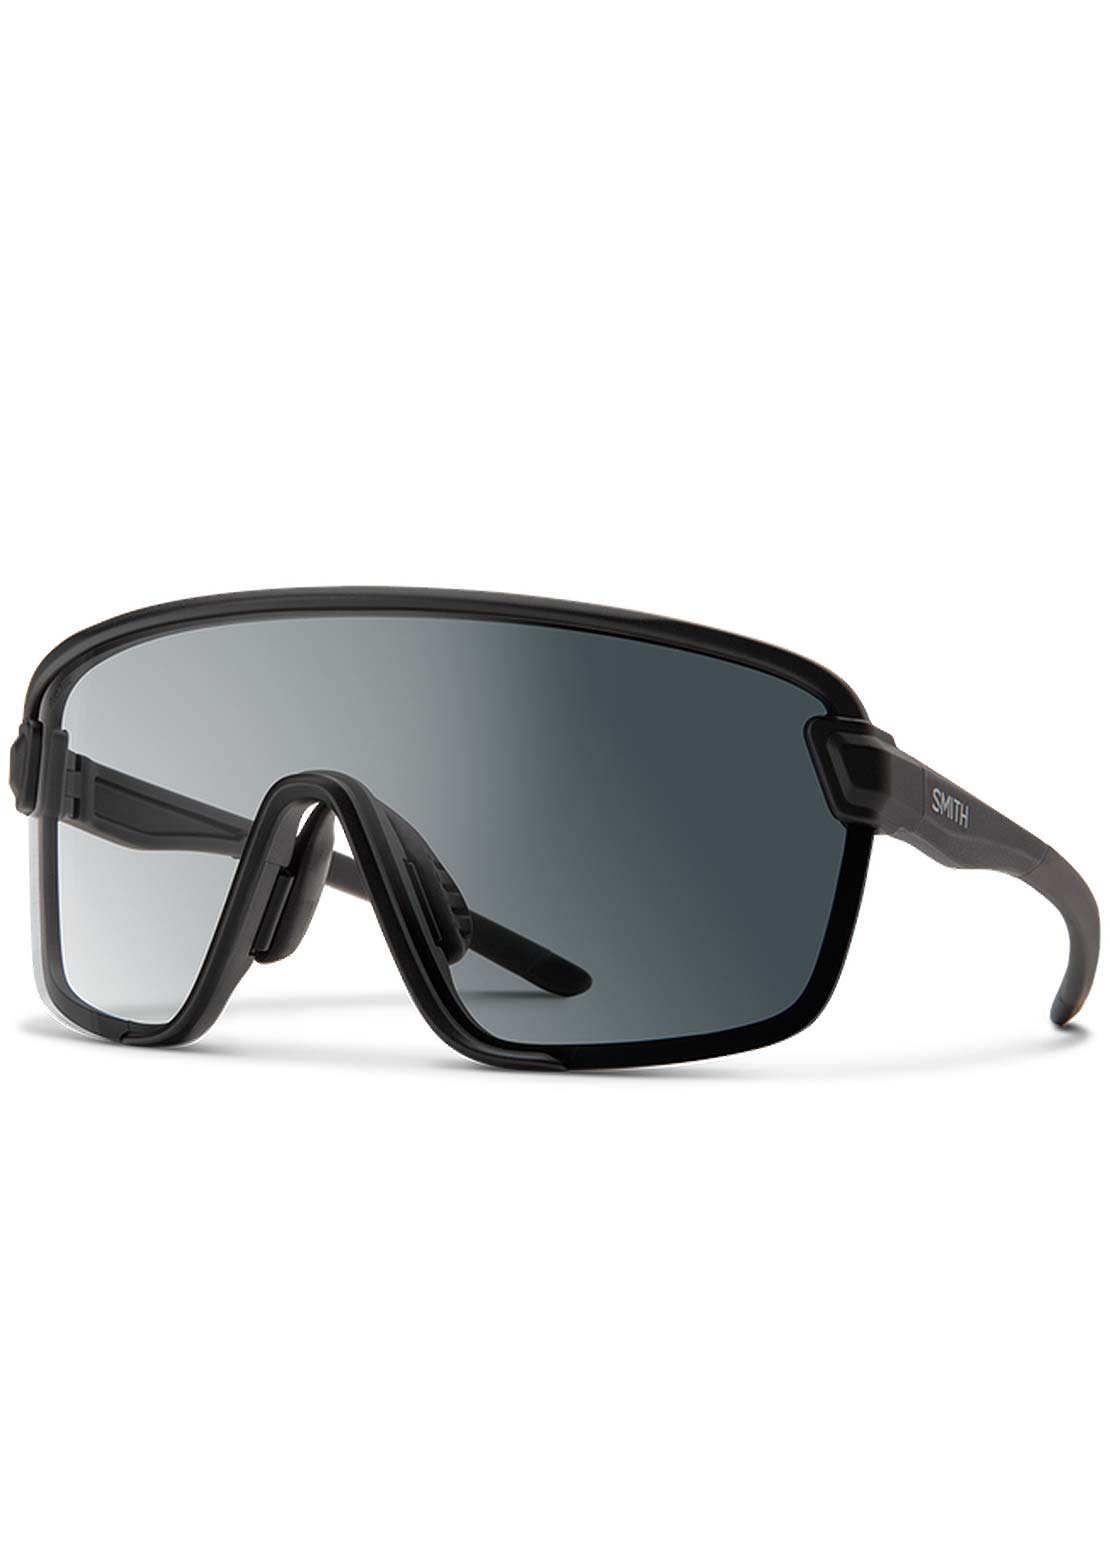 Smith Bobcat Mountain Bike Sunglasses Black/Chromapop Photochromic Clear To Gray